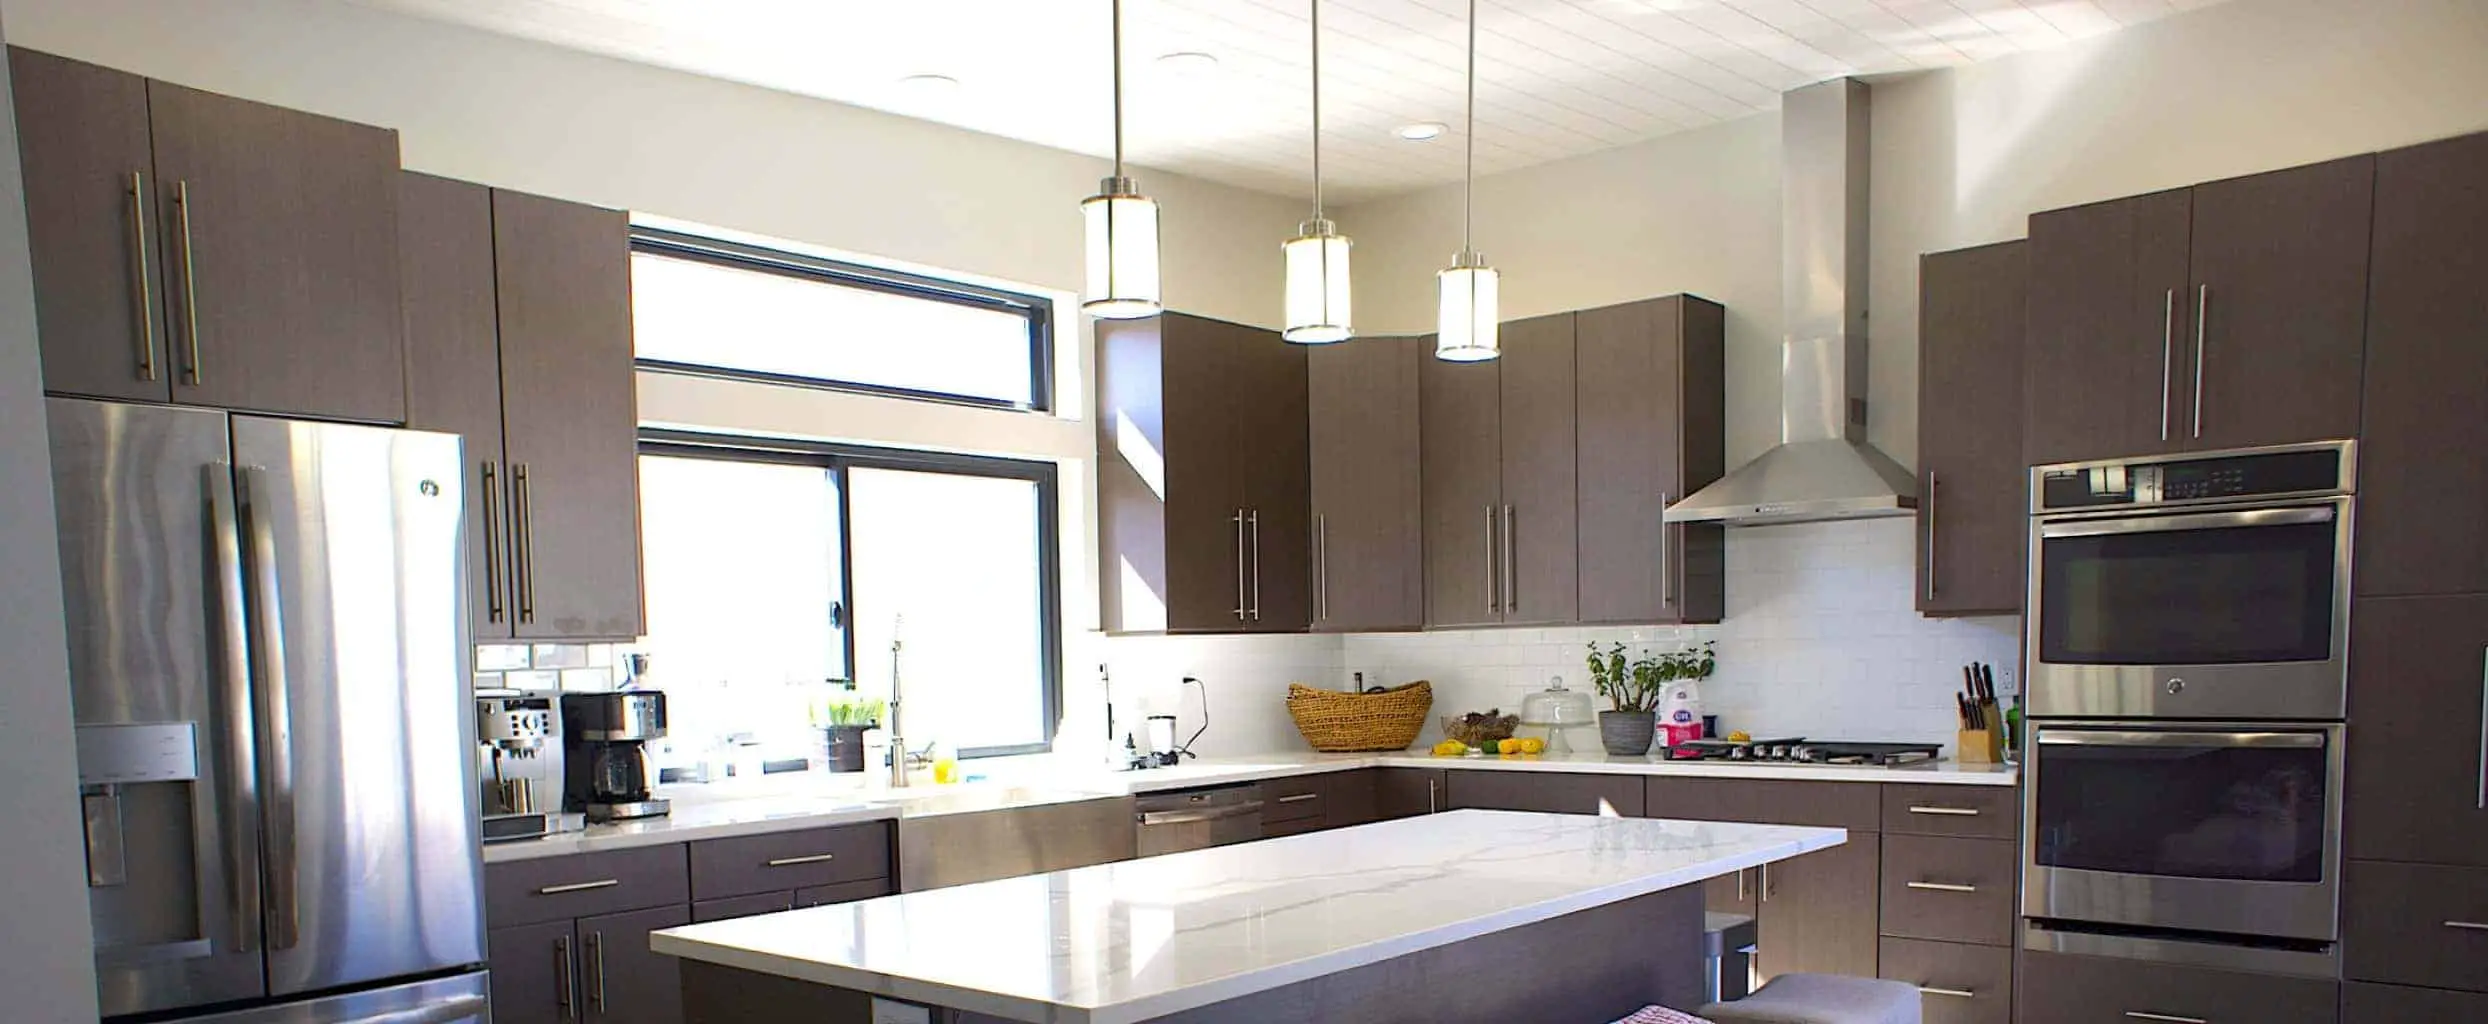 Zip Kit Homes Alpine 2 model modern prefab modular home kitchen.